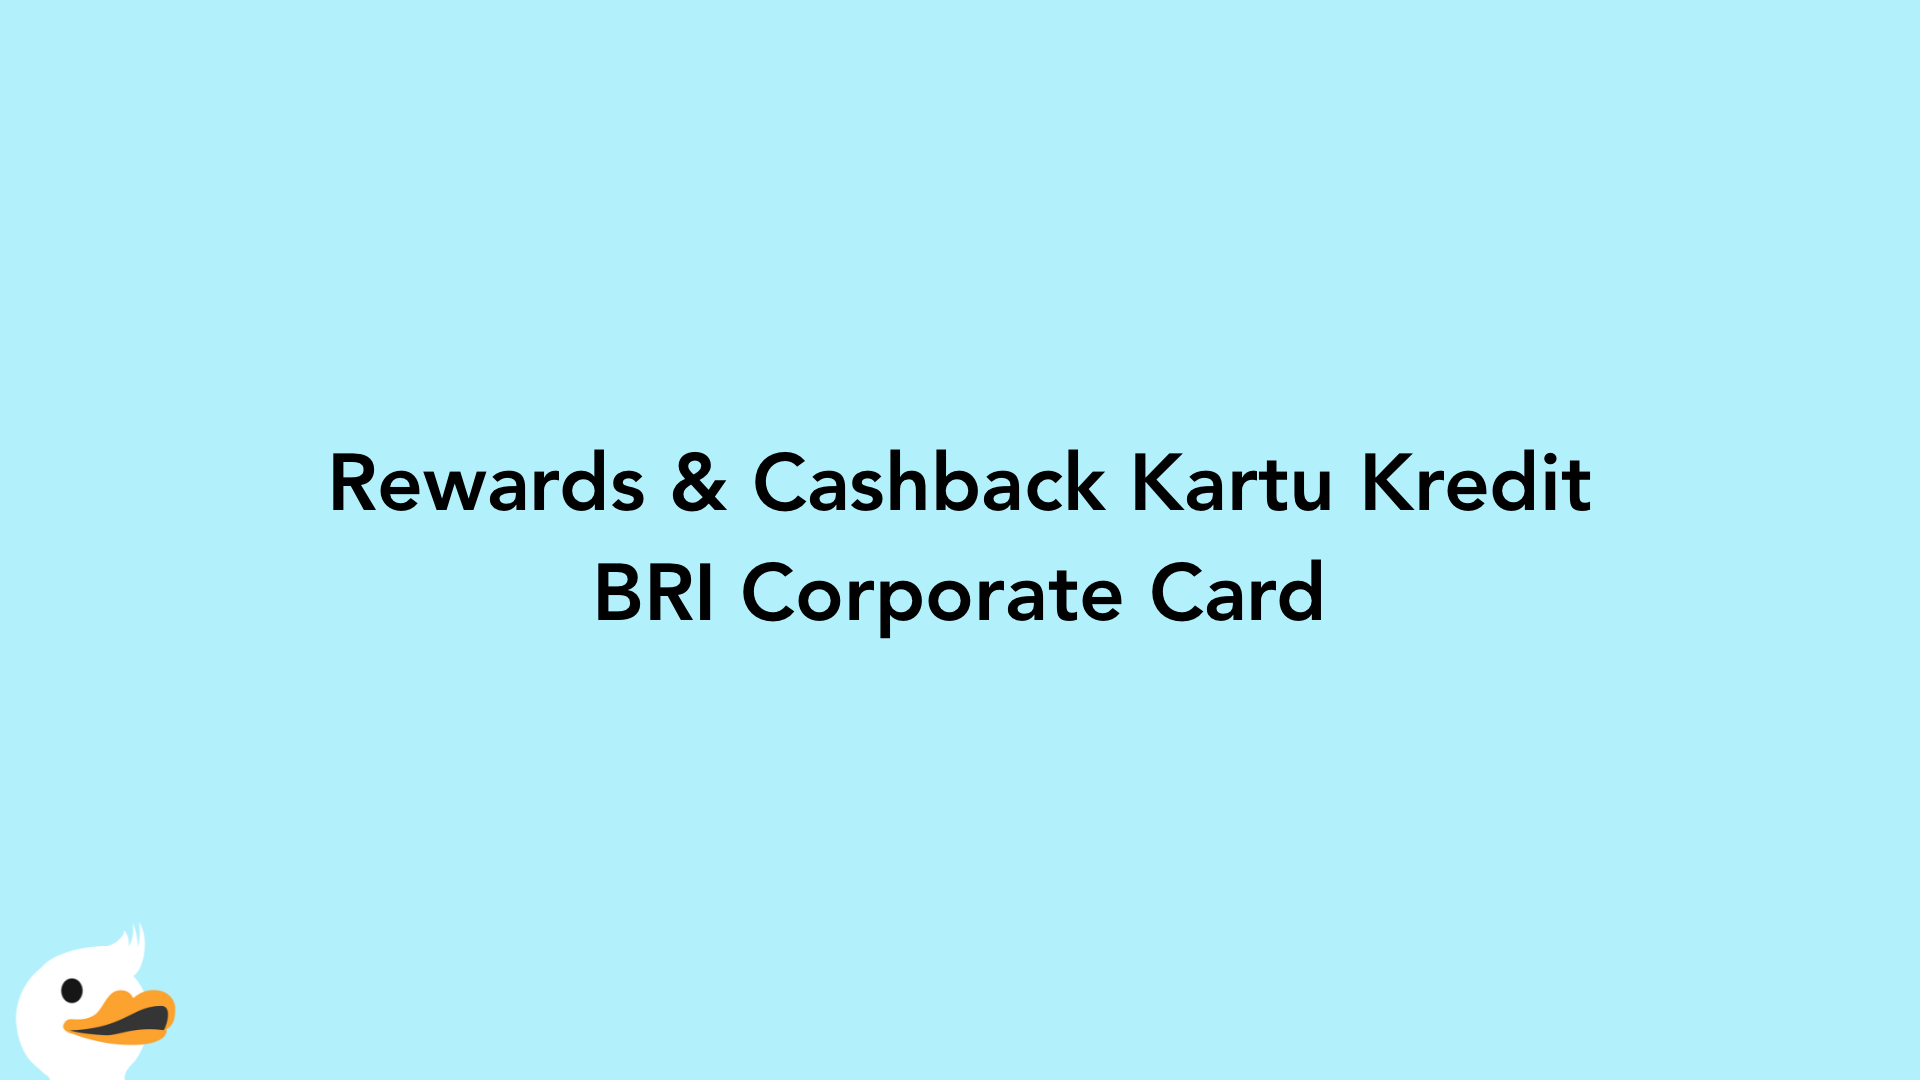 Rewards & Cashback Kartu Kredit BRI Corporate Card